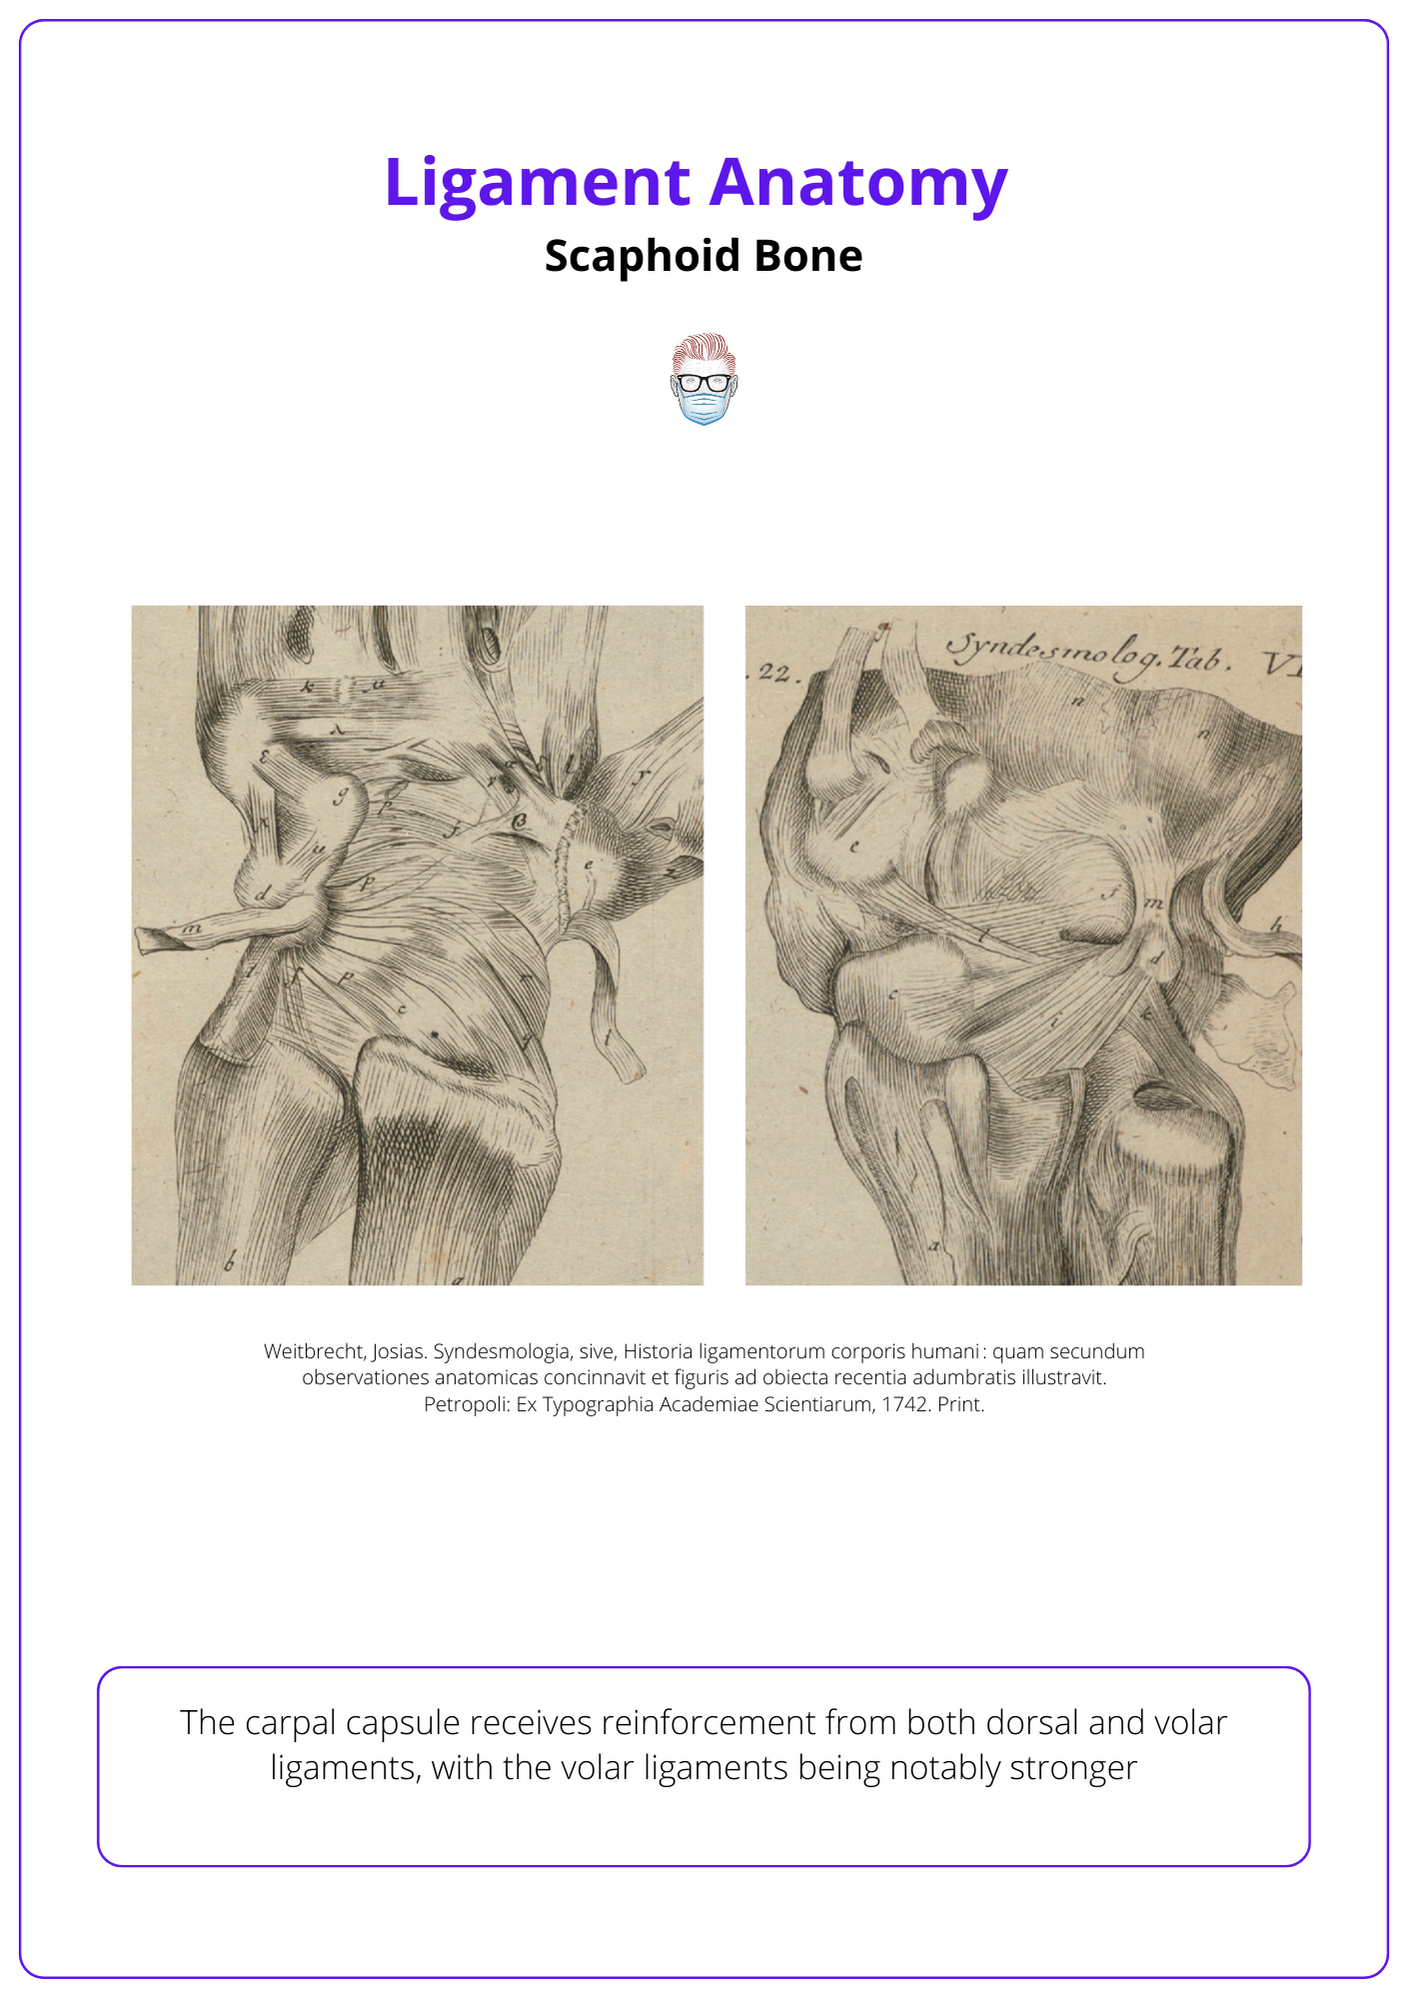 Ligament Anatomy, Scaphoid bone anatomy